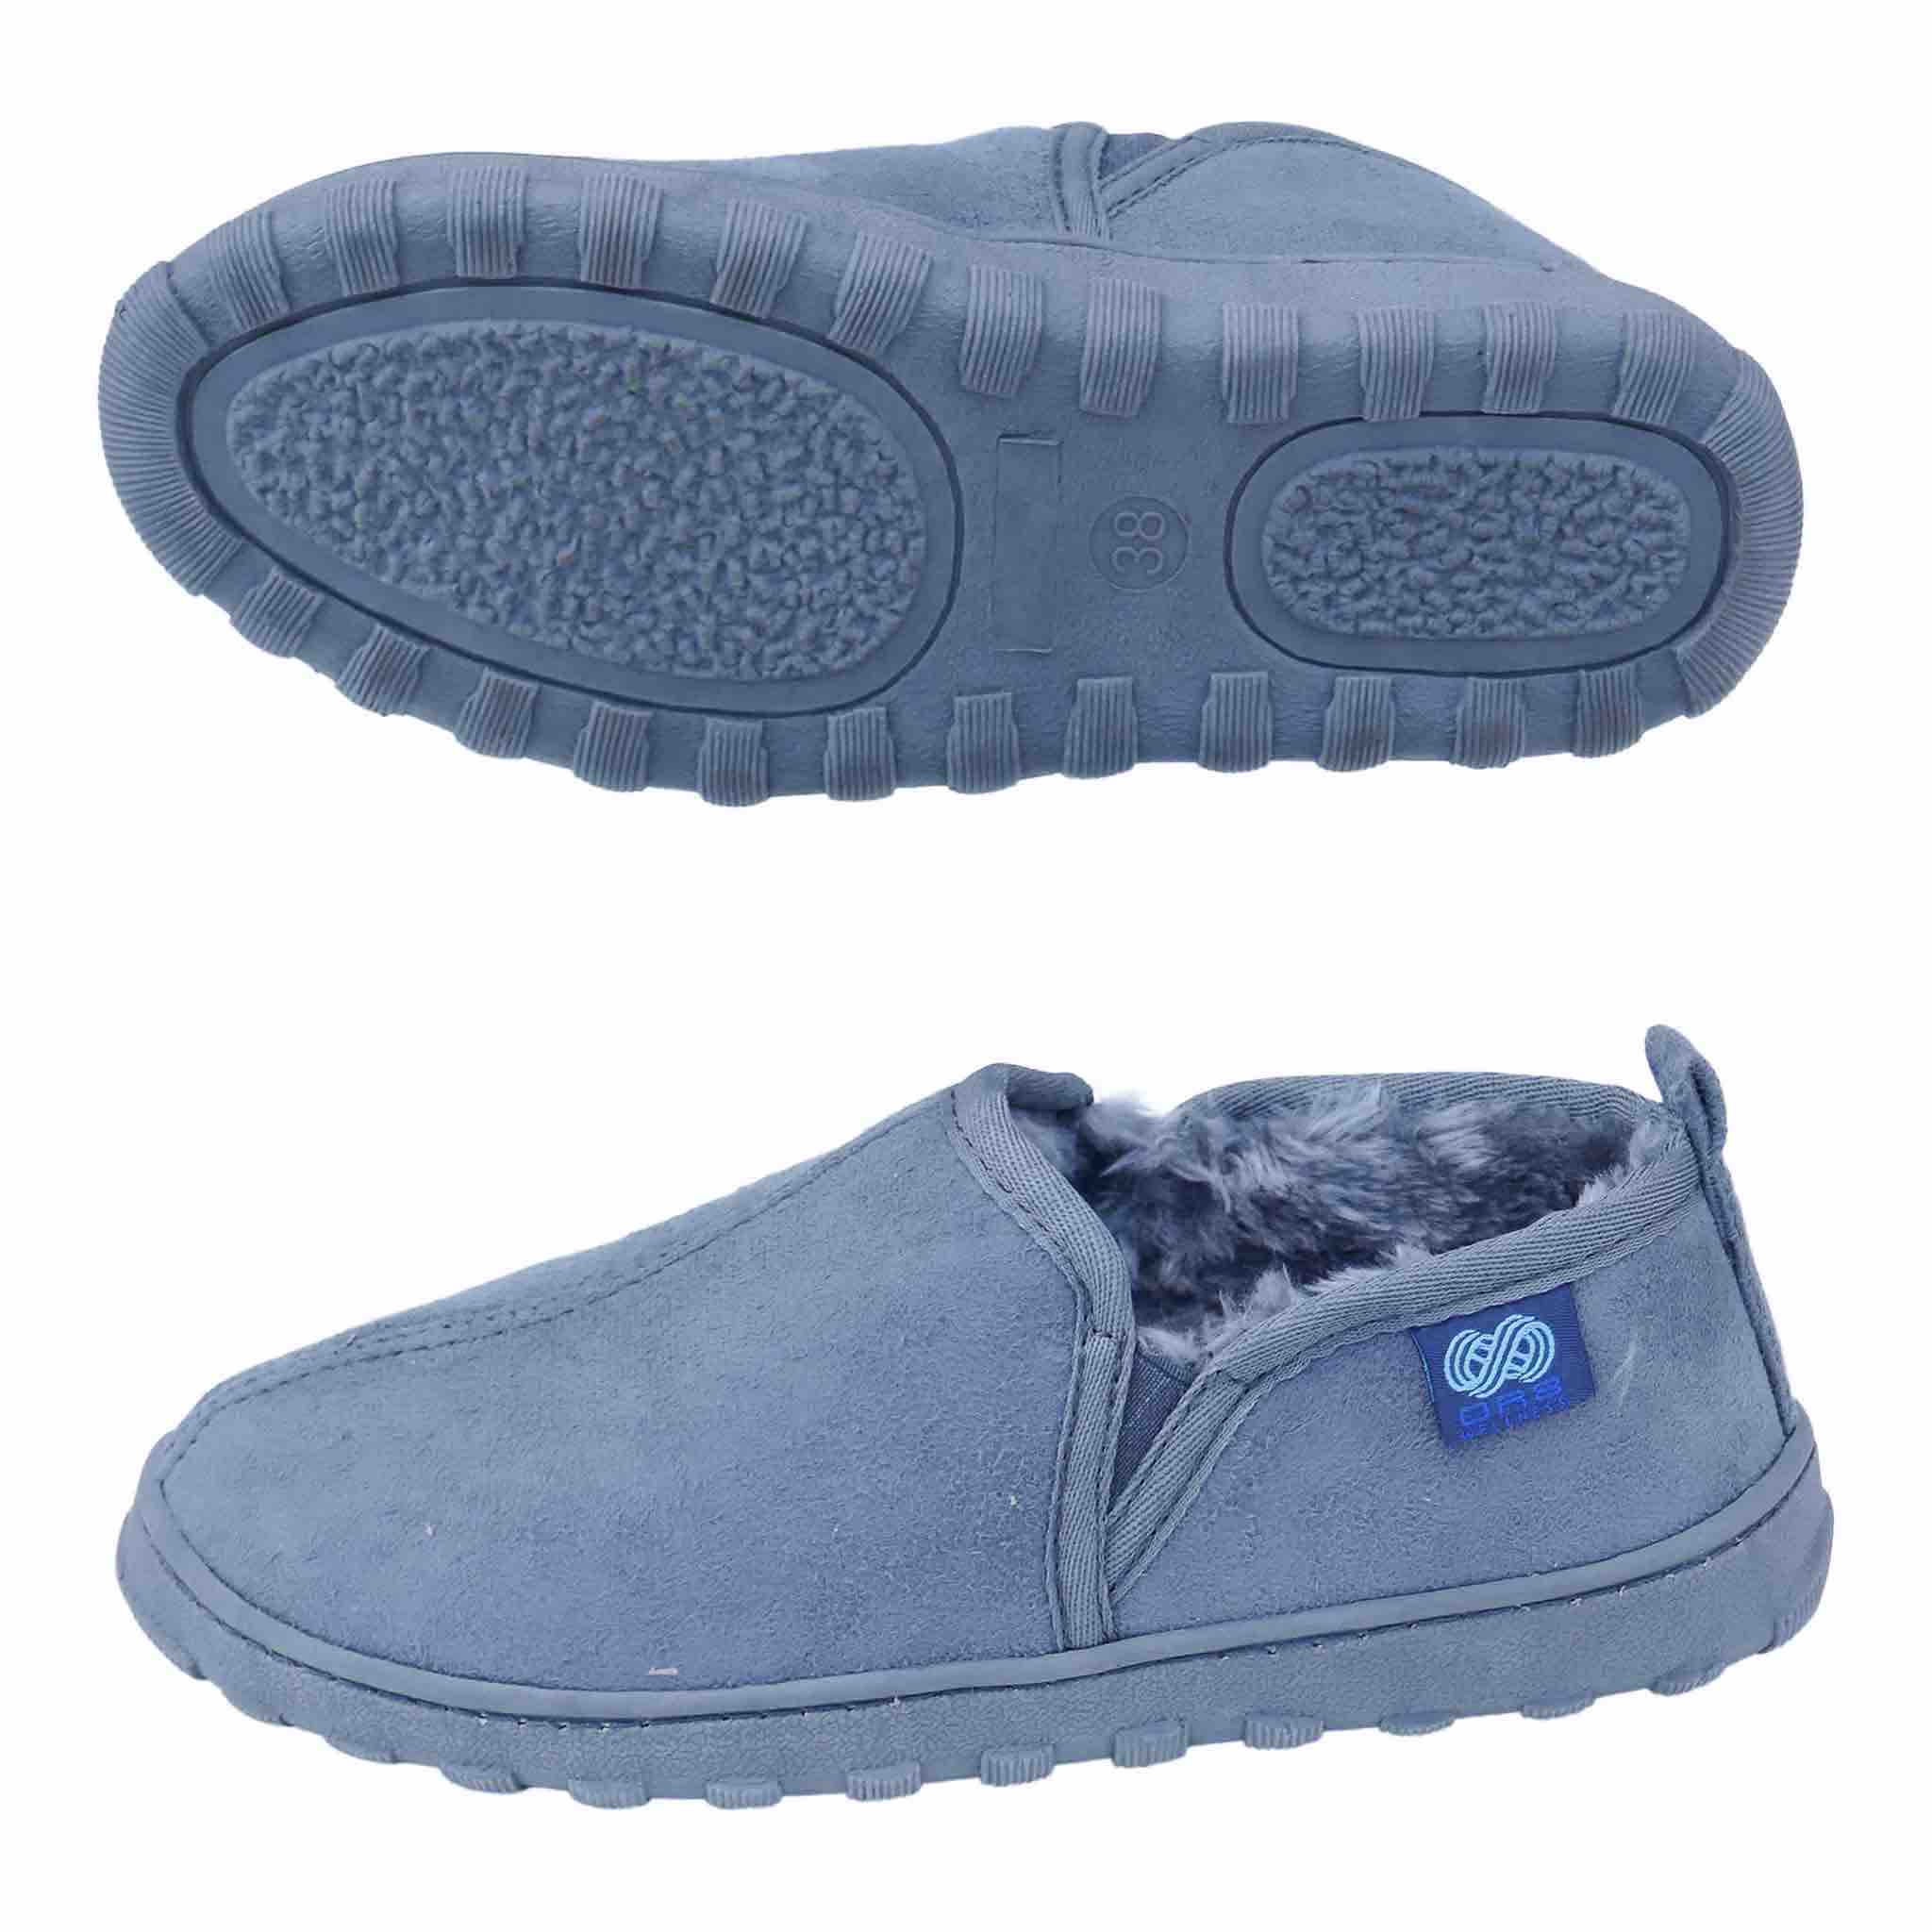 orthopaedic slippers for womens uk